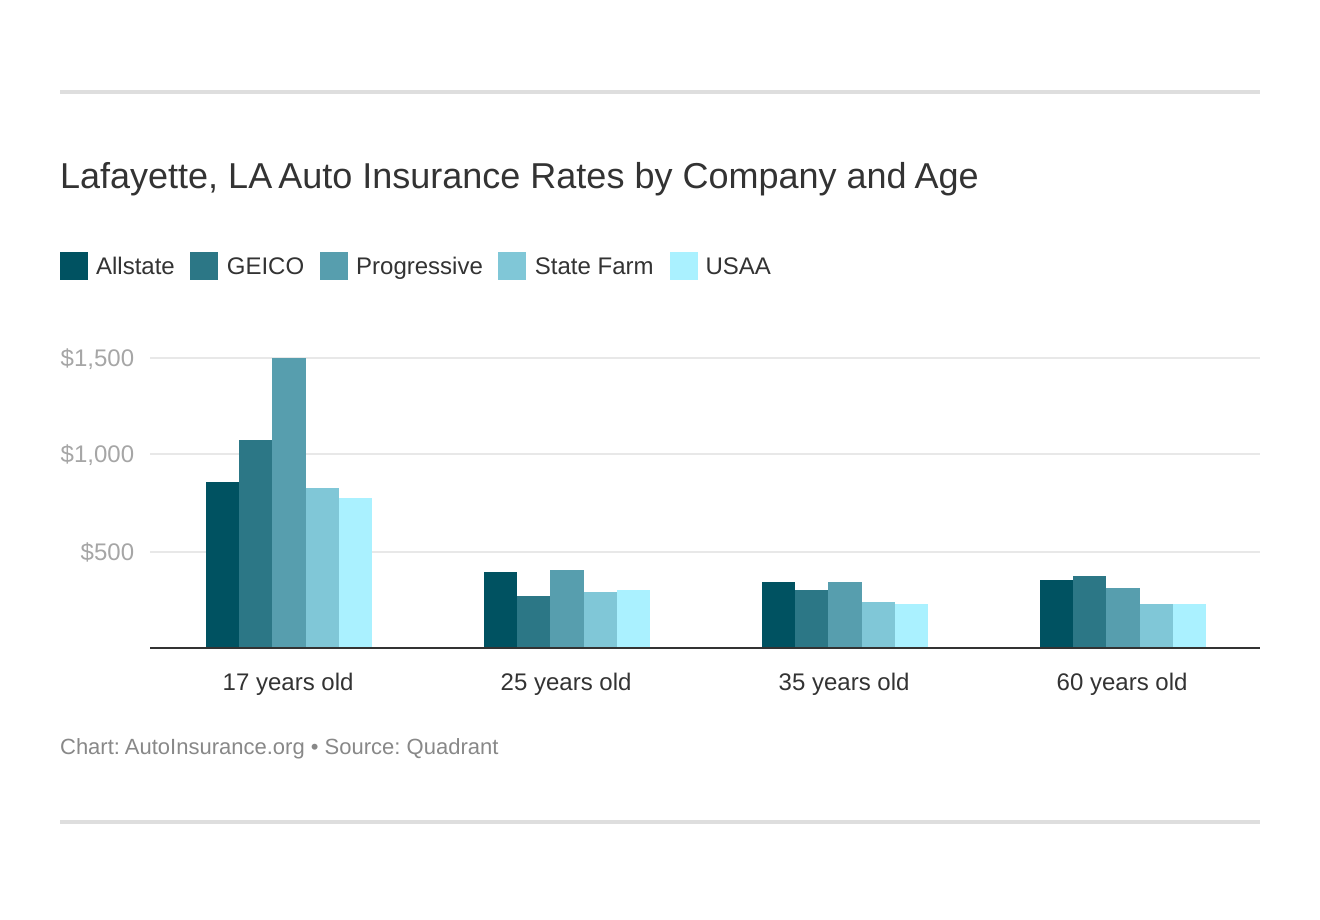 Lafayette, LA Auto Insurance Rates by Company and Age